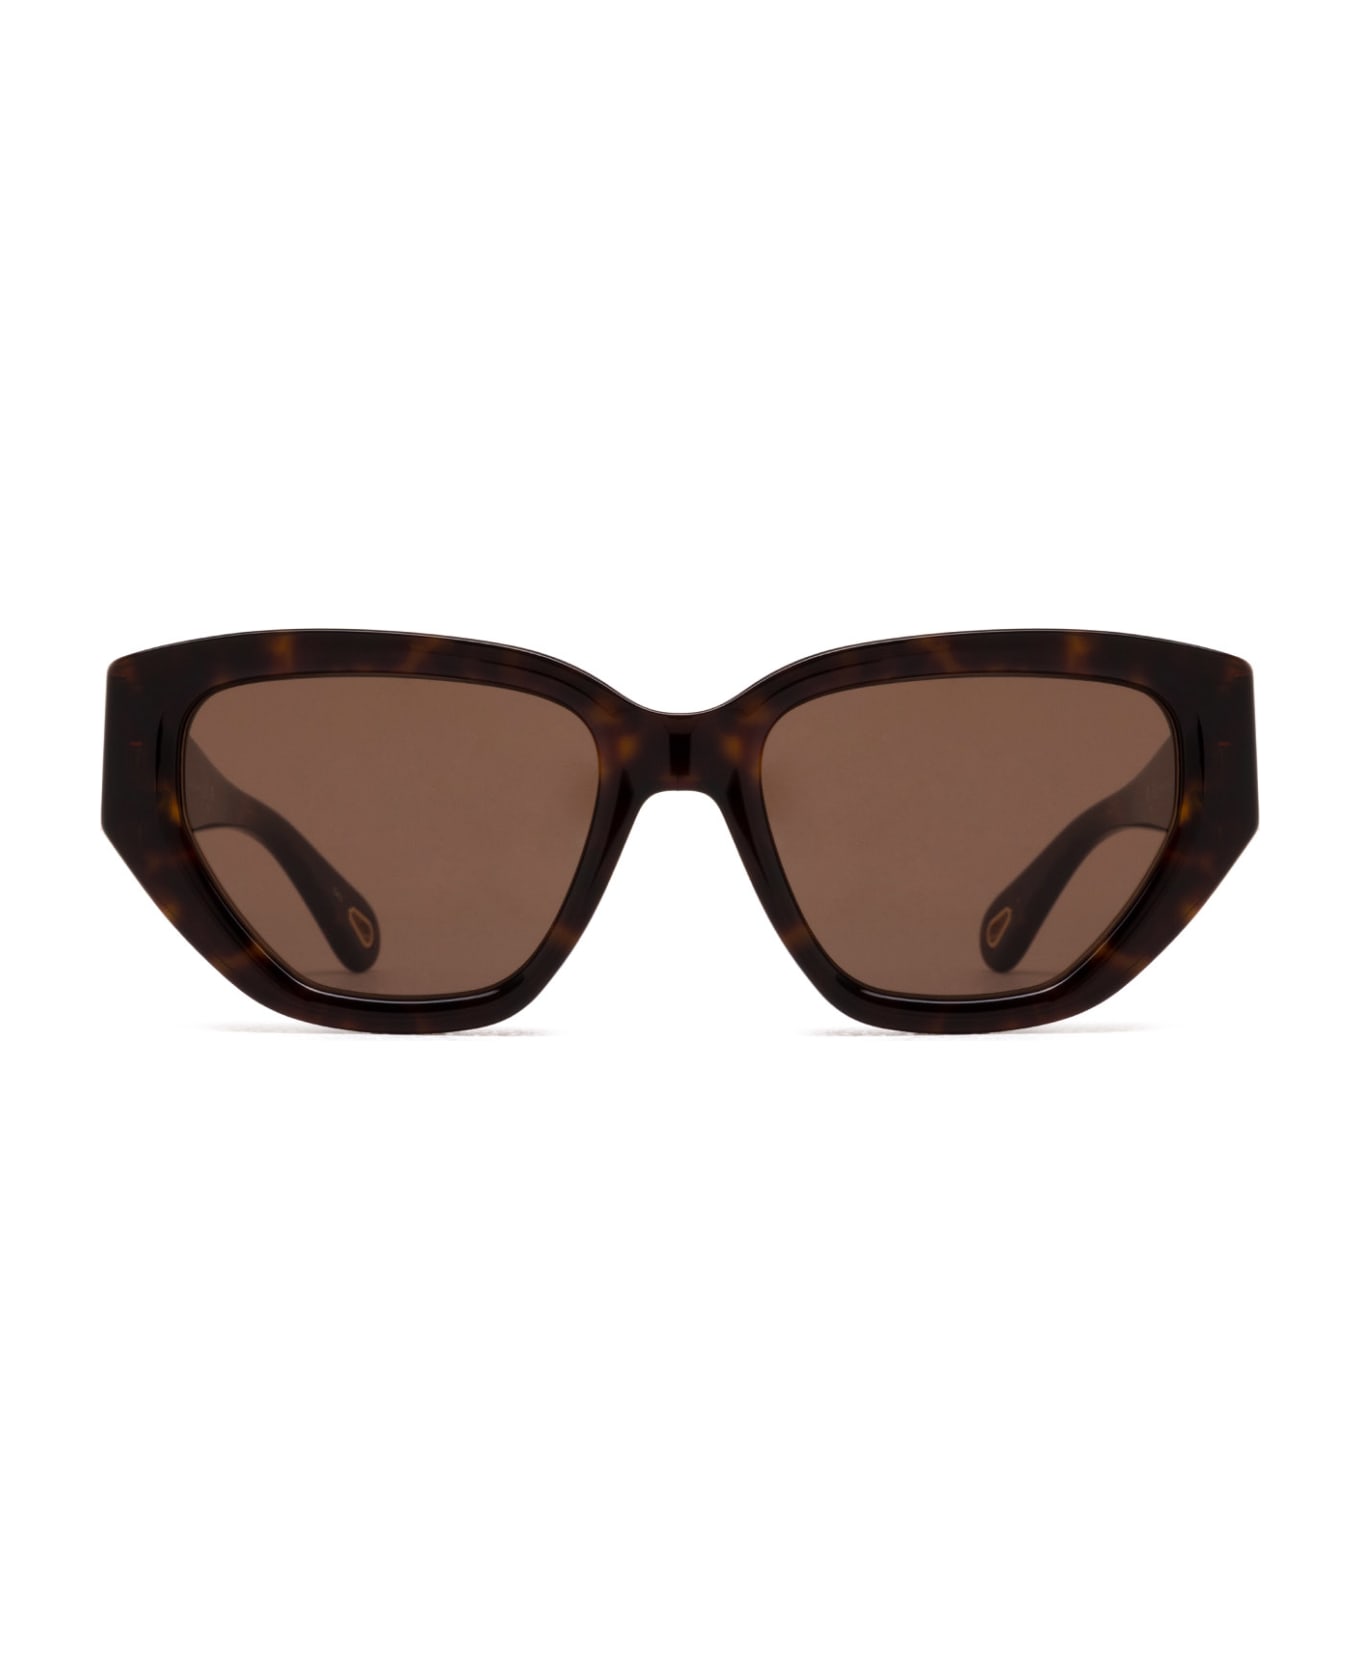 Chloé Eyewear Ch0235s Havana Sunglasses - Havana サングラス